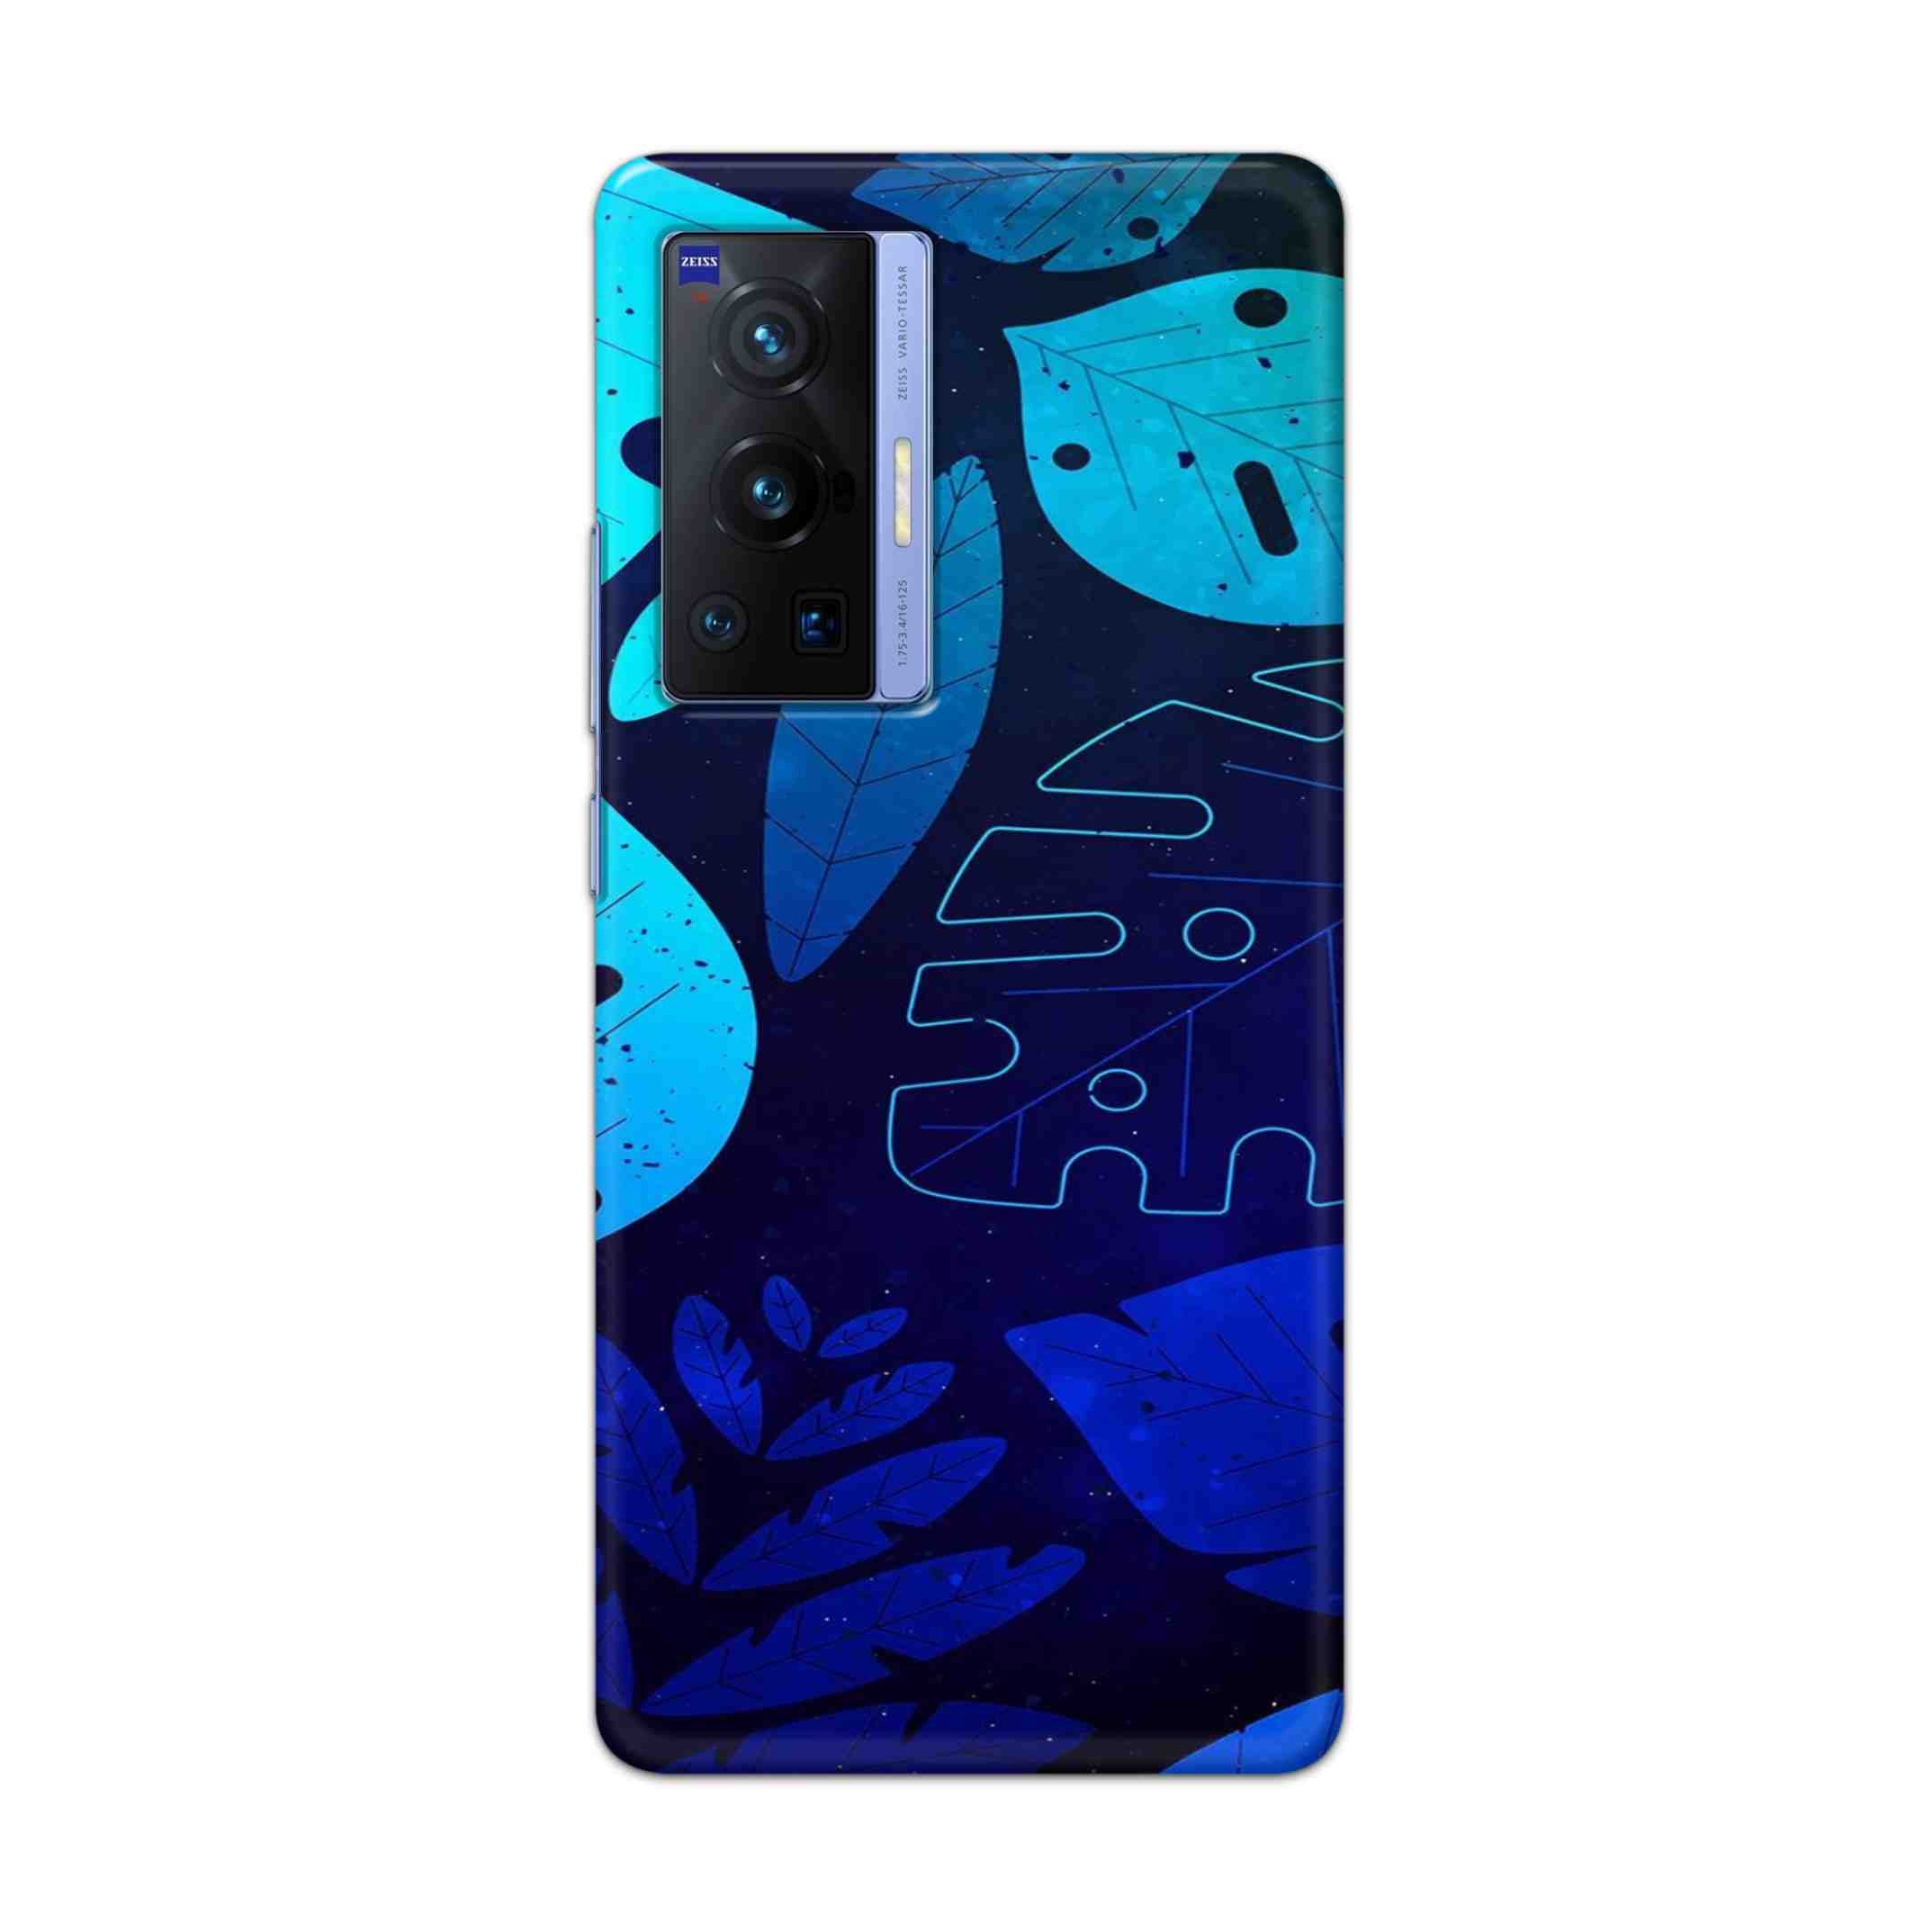 Buy Neon Leaf Hard Back Mobile Phone Case Cover For Vivo X70 Pro Online